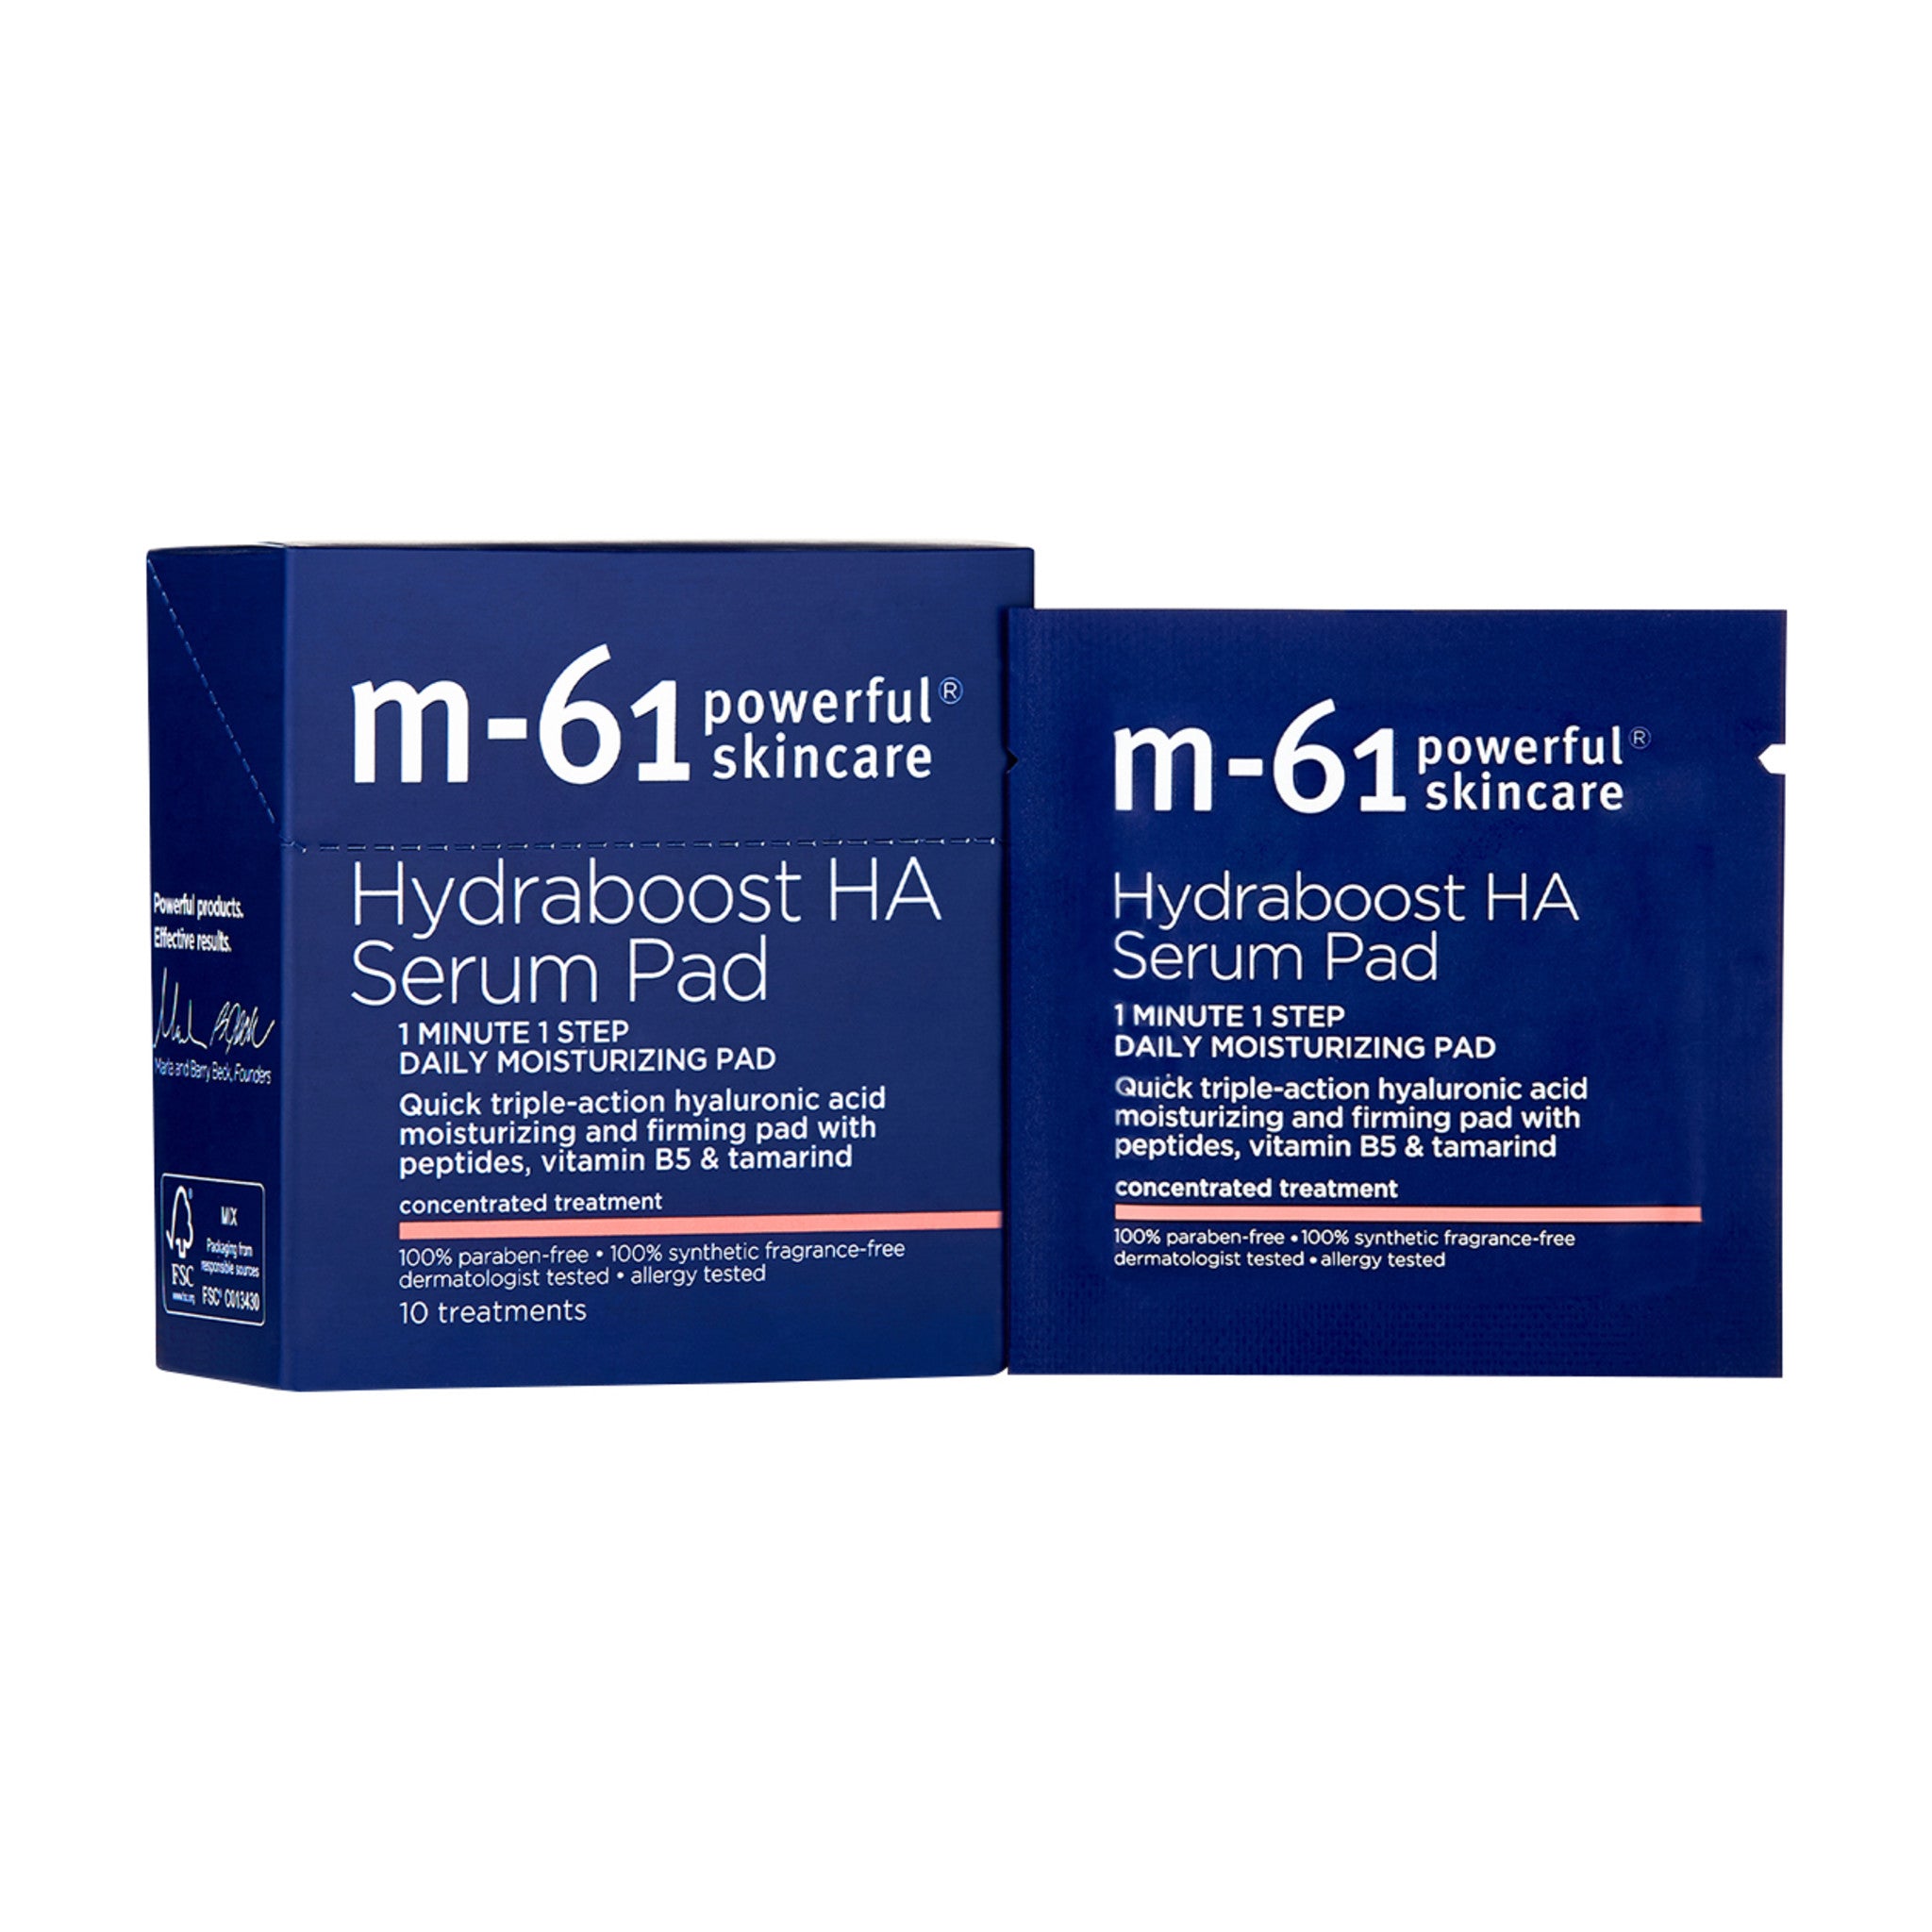 M-61 Hydraboost HA Serum Pad Size variant: 10 treatments main image.